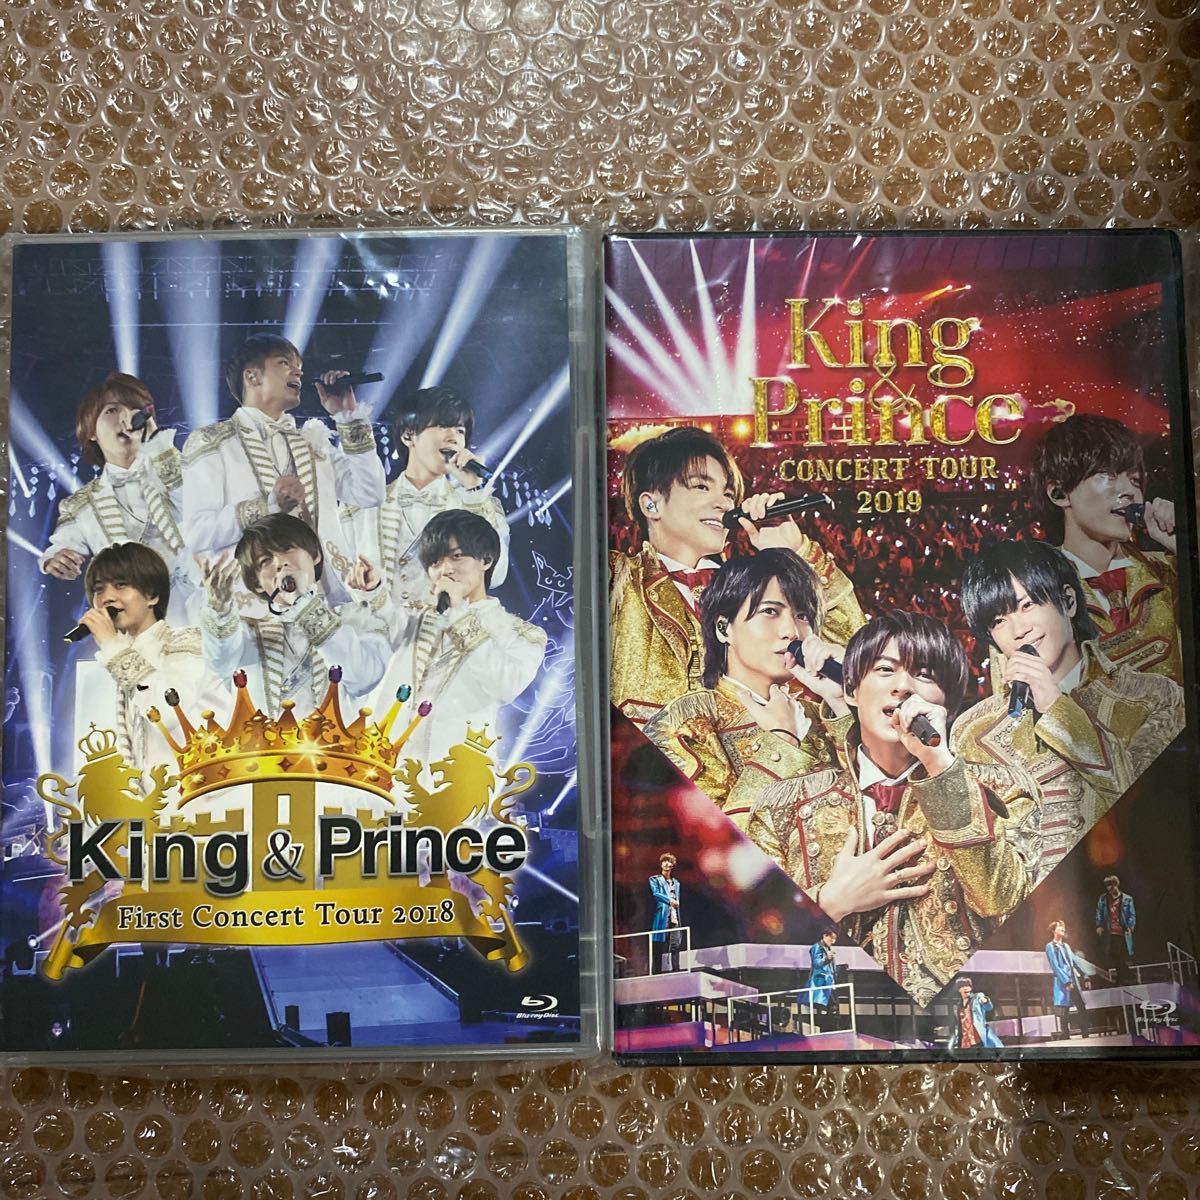 King & Prince / CONCERT TOUR 2018 DVD 2019 Blu-ray CD+DVD｜PayPay 